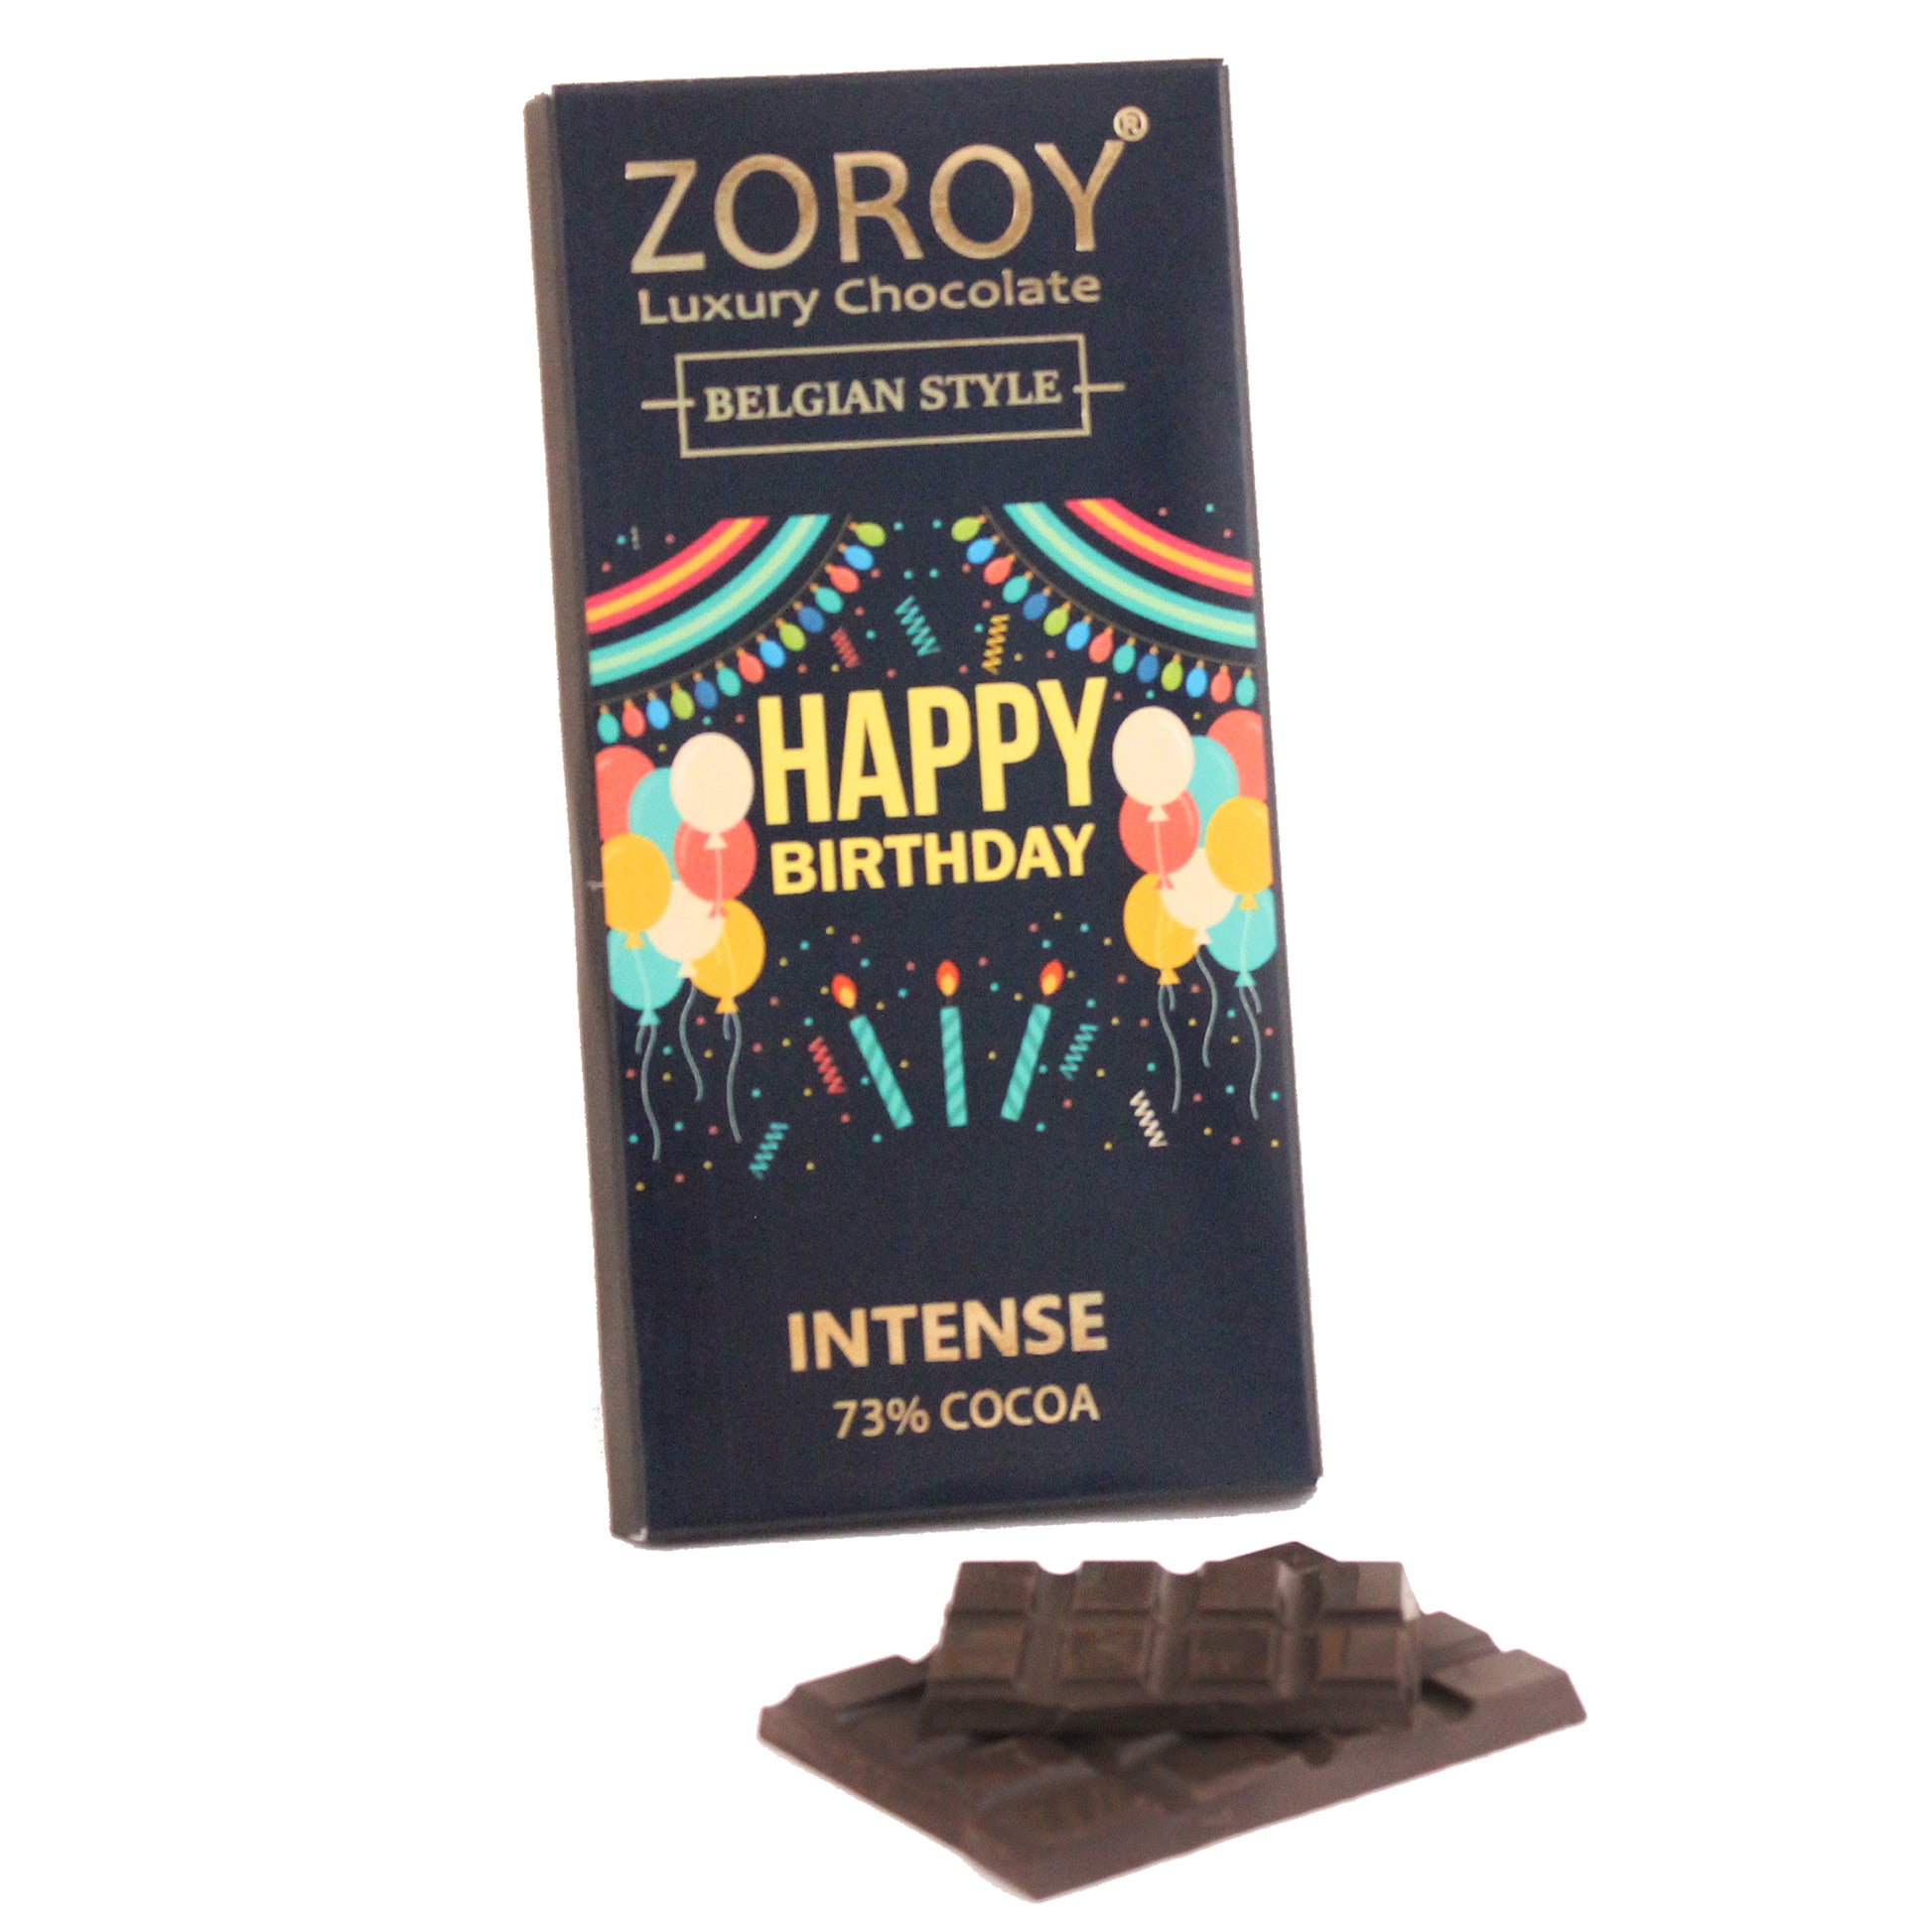 ZOROY LUXURY CHOCOLATE Pure Couverture 73% Intense Dark chocolate